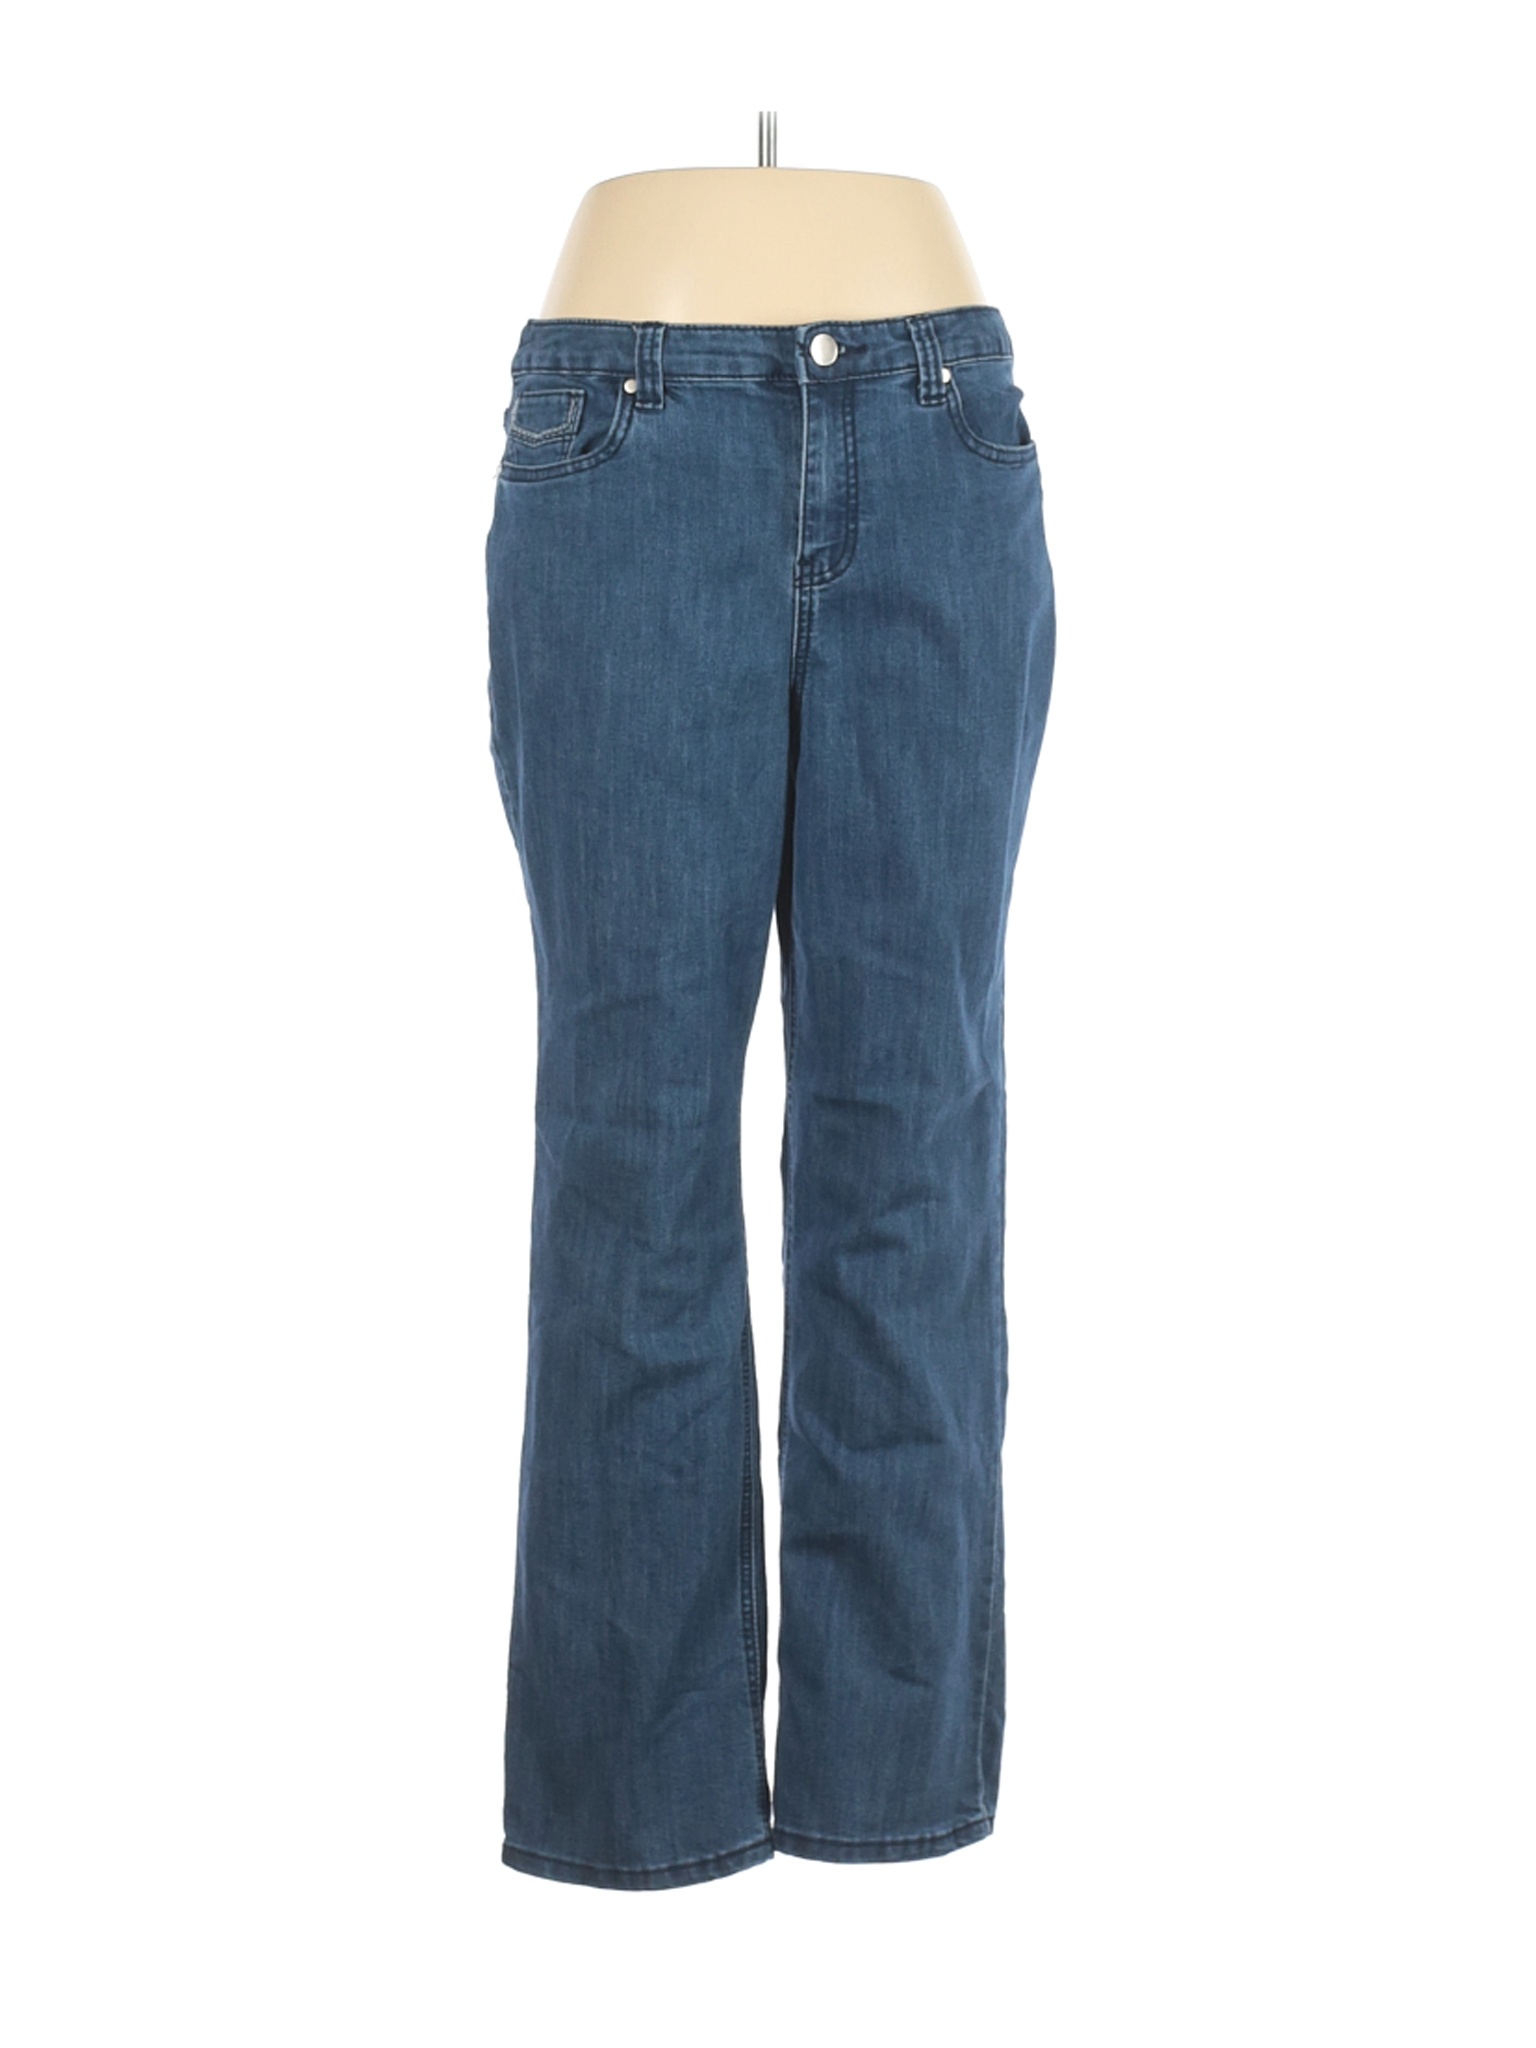 Christopher & Banks Women Blue Jeans 10 Petites | eBay